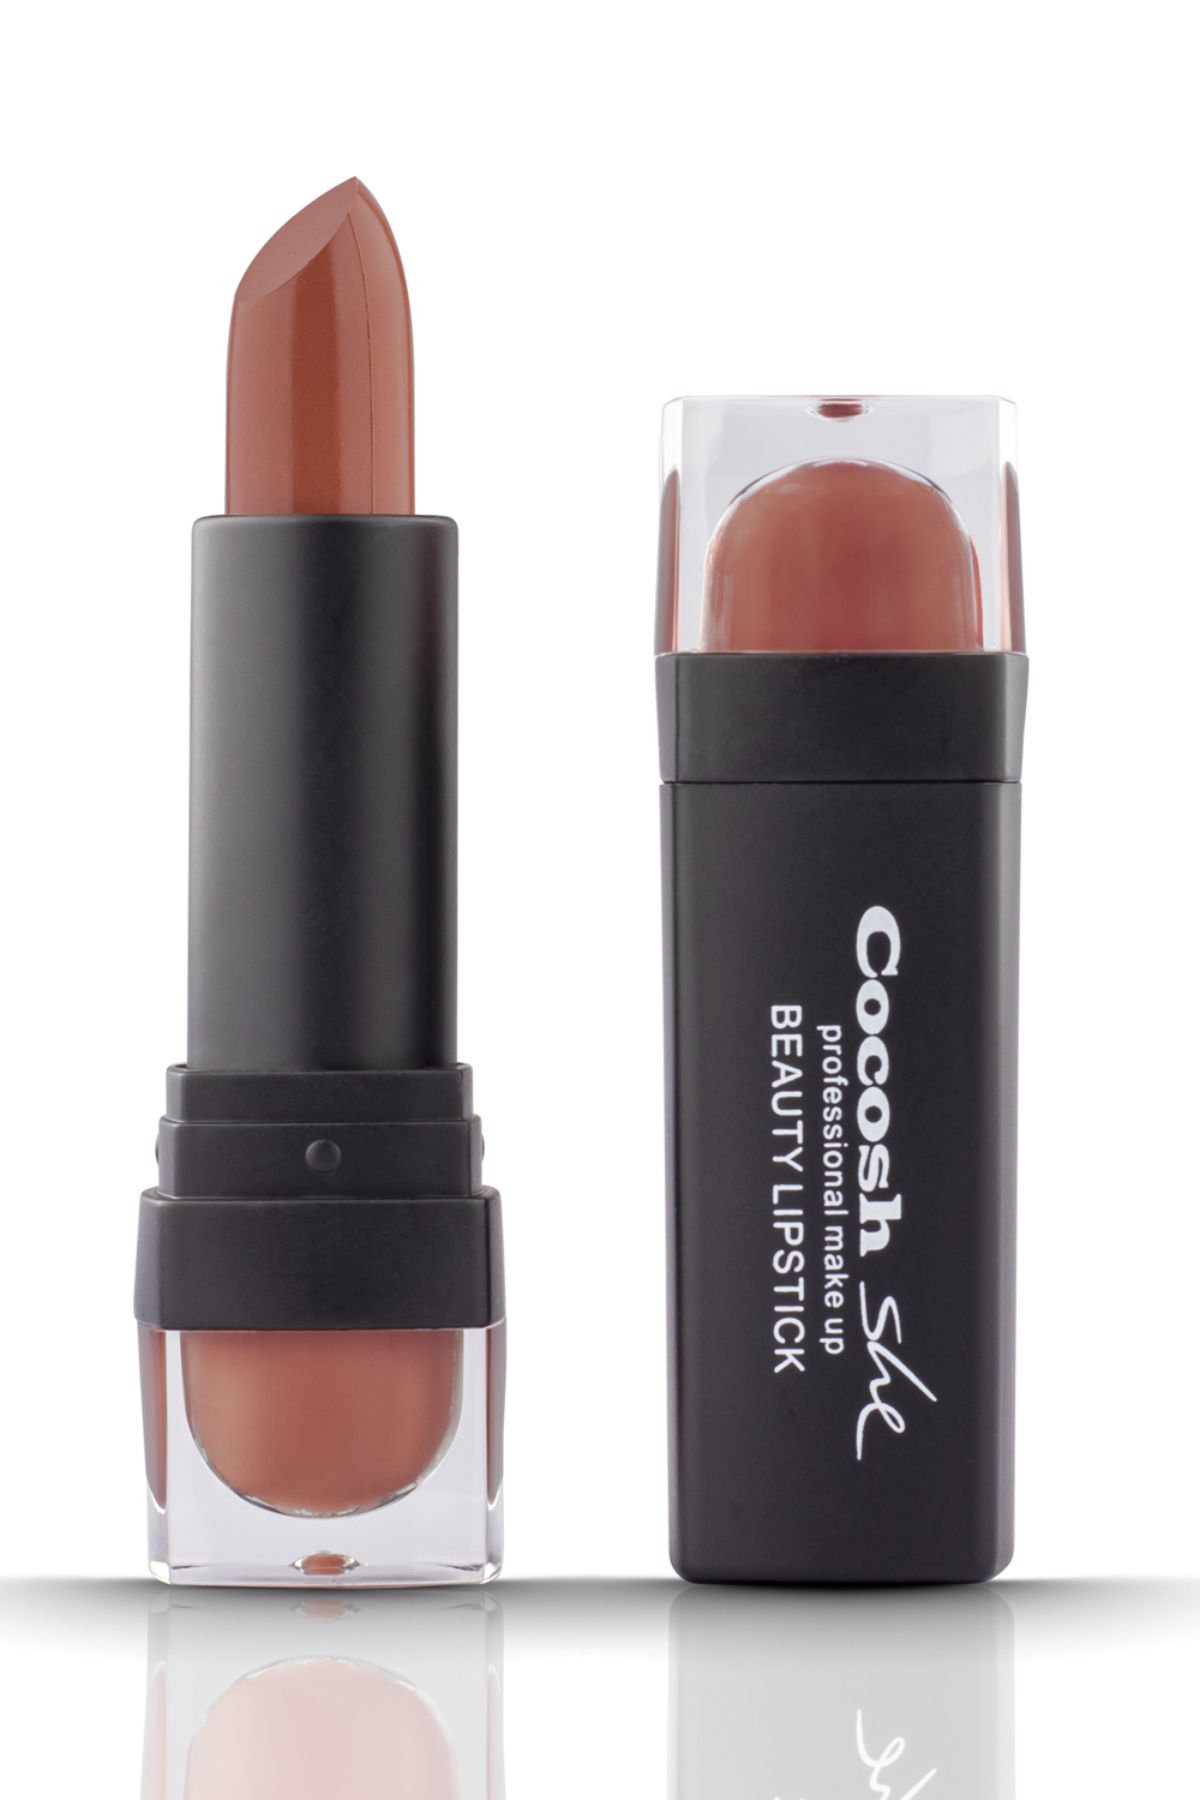 Cocosh She Beauty Lipstick Ruj 01 Furry, Kremsi Formül, Saten Görünüm, Orta-Tam Kapatıcılık